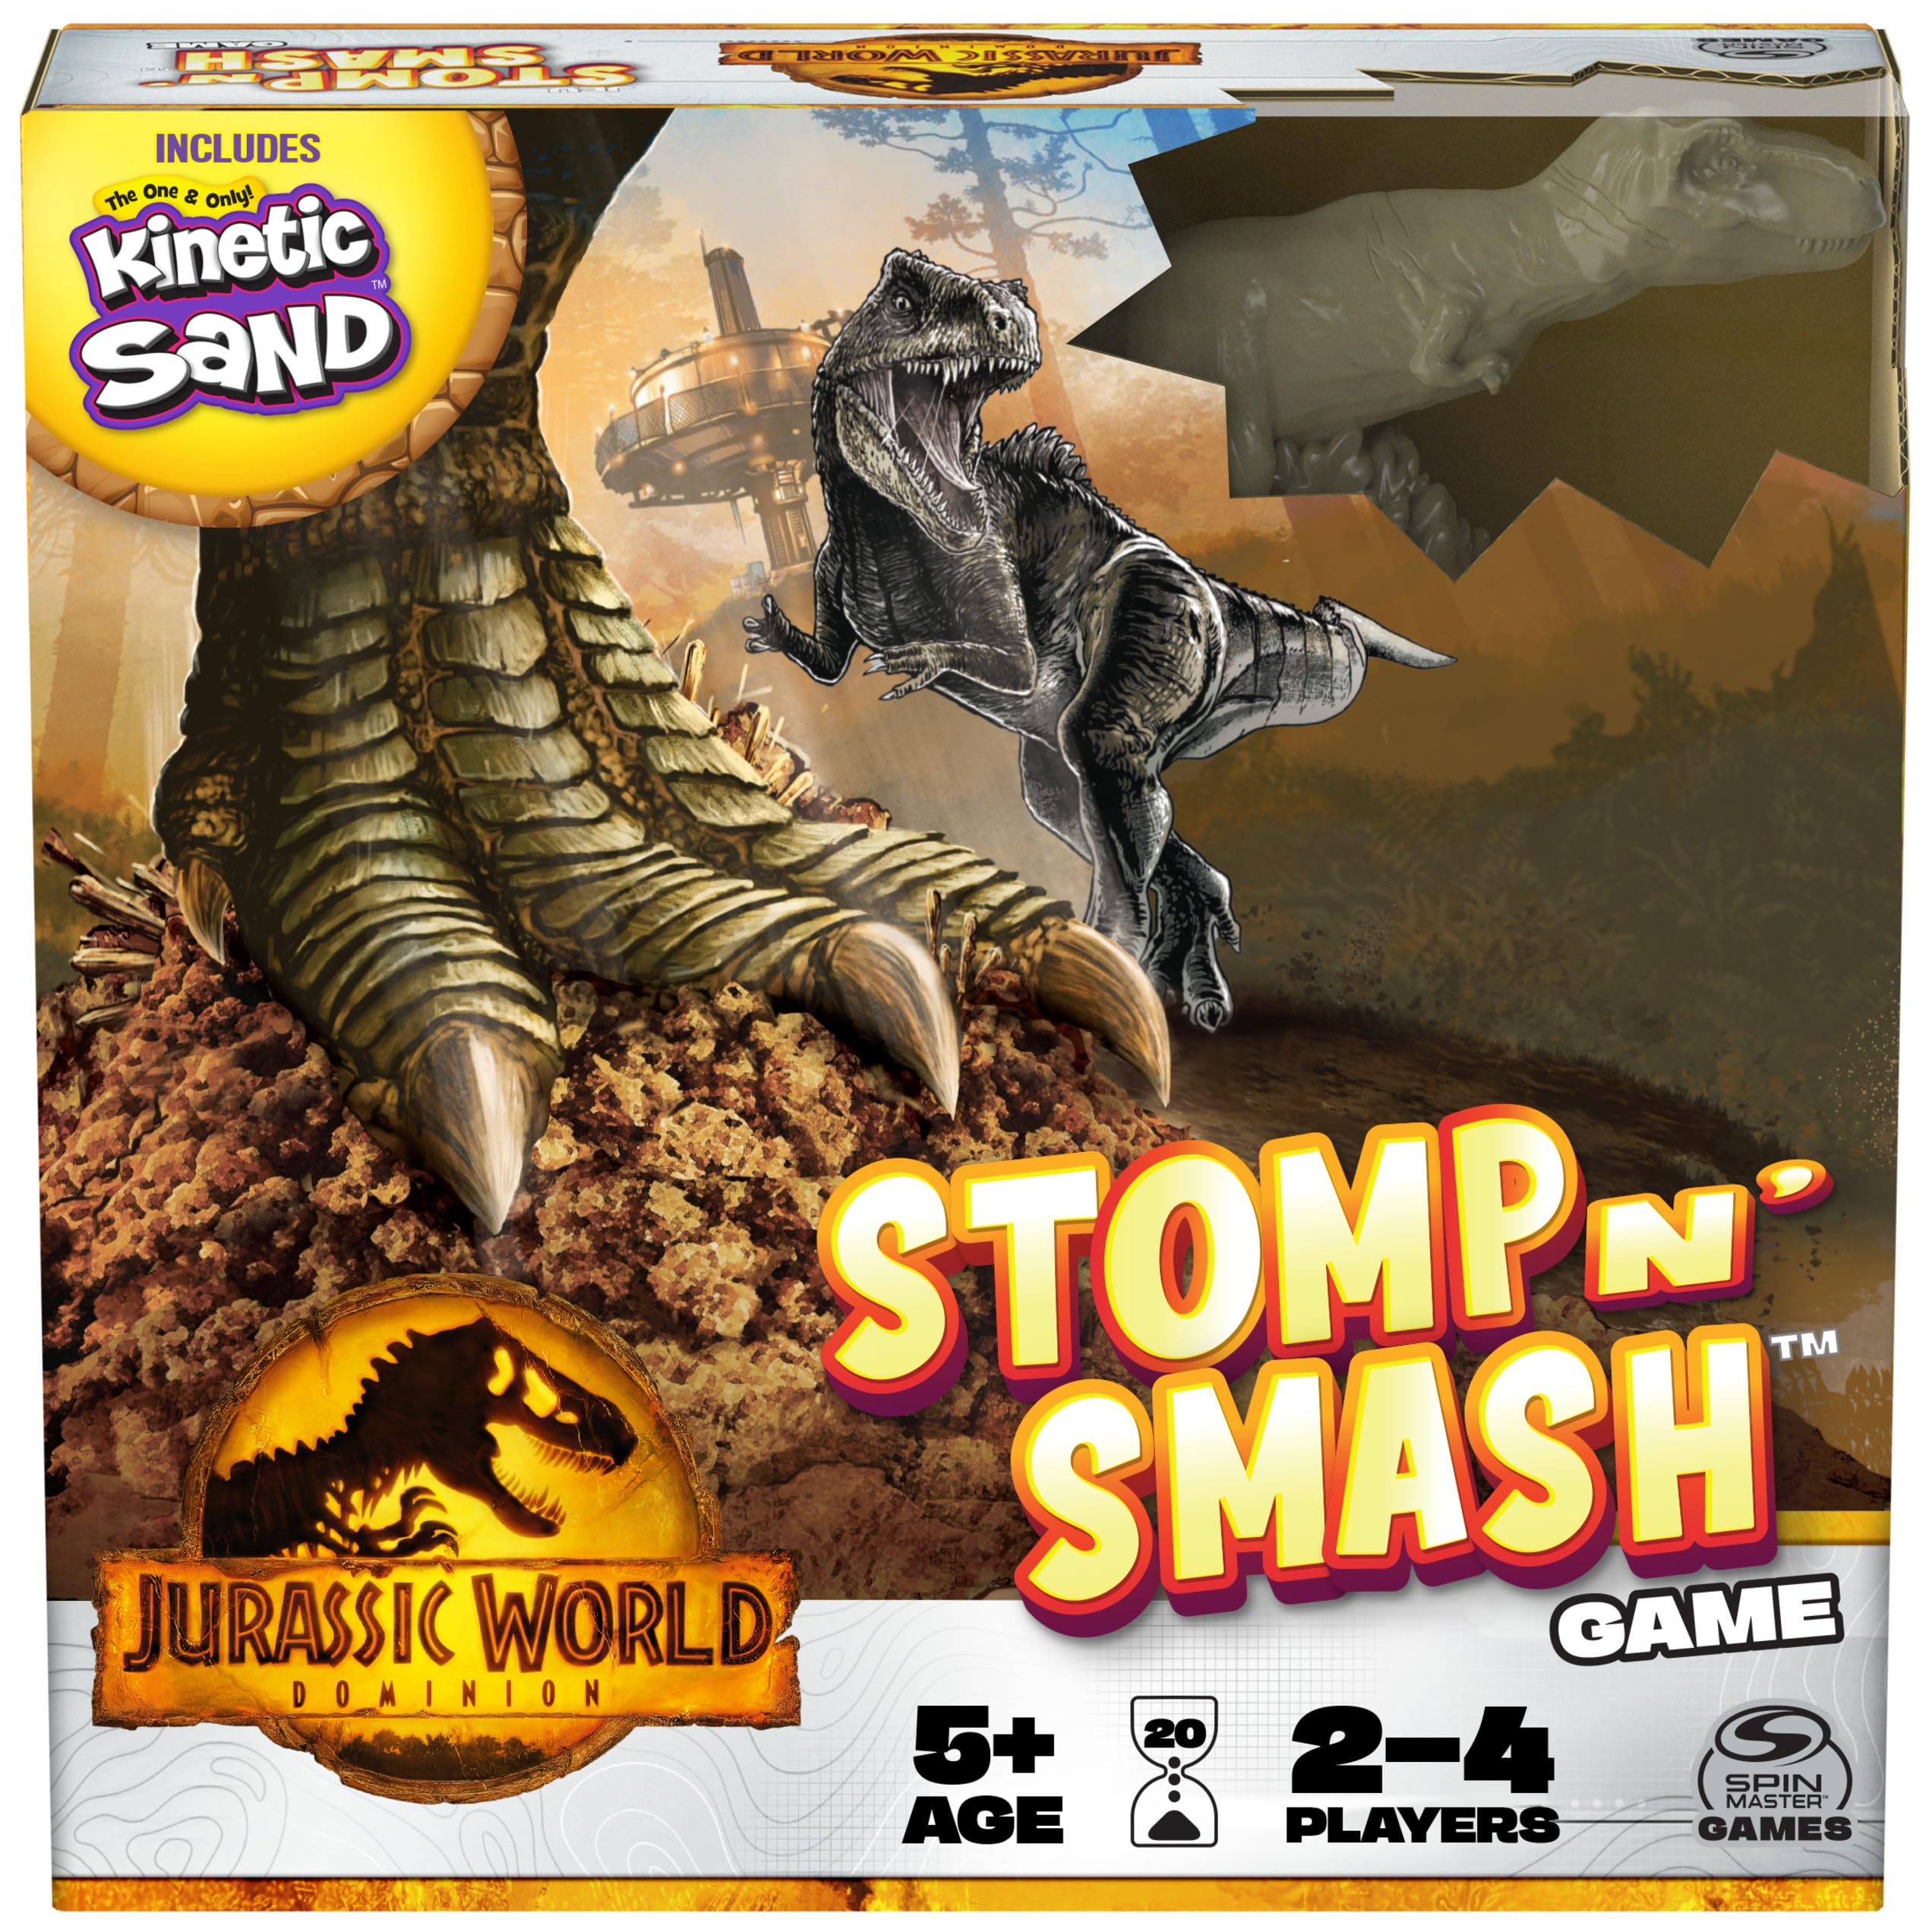 Jurassic World Dominion, Stomp NÃƒÆ’Ã†â€™Ãƒâ€šÃ‚Â¢ÃƒÆ’Ã‚Â¢ÃƒÂ¢Ã¢â€šÂ¬Ã…Â¡Ãƒâ€šÃ‚Â¬ÃƒÆ’Ã‚Â¢ÃƒÂ¢Ã¢â€šÂ¬Ã…Â¾Ãƒâ€šÃ‚Â¢ Smash Board Game Sensory Dinosaur Toy with Kinetic Sand Jurassic Park Movie Family Game, for Kids Ages 5 & up